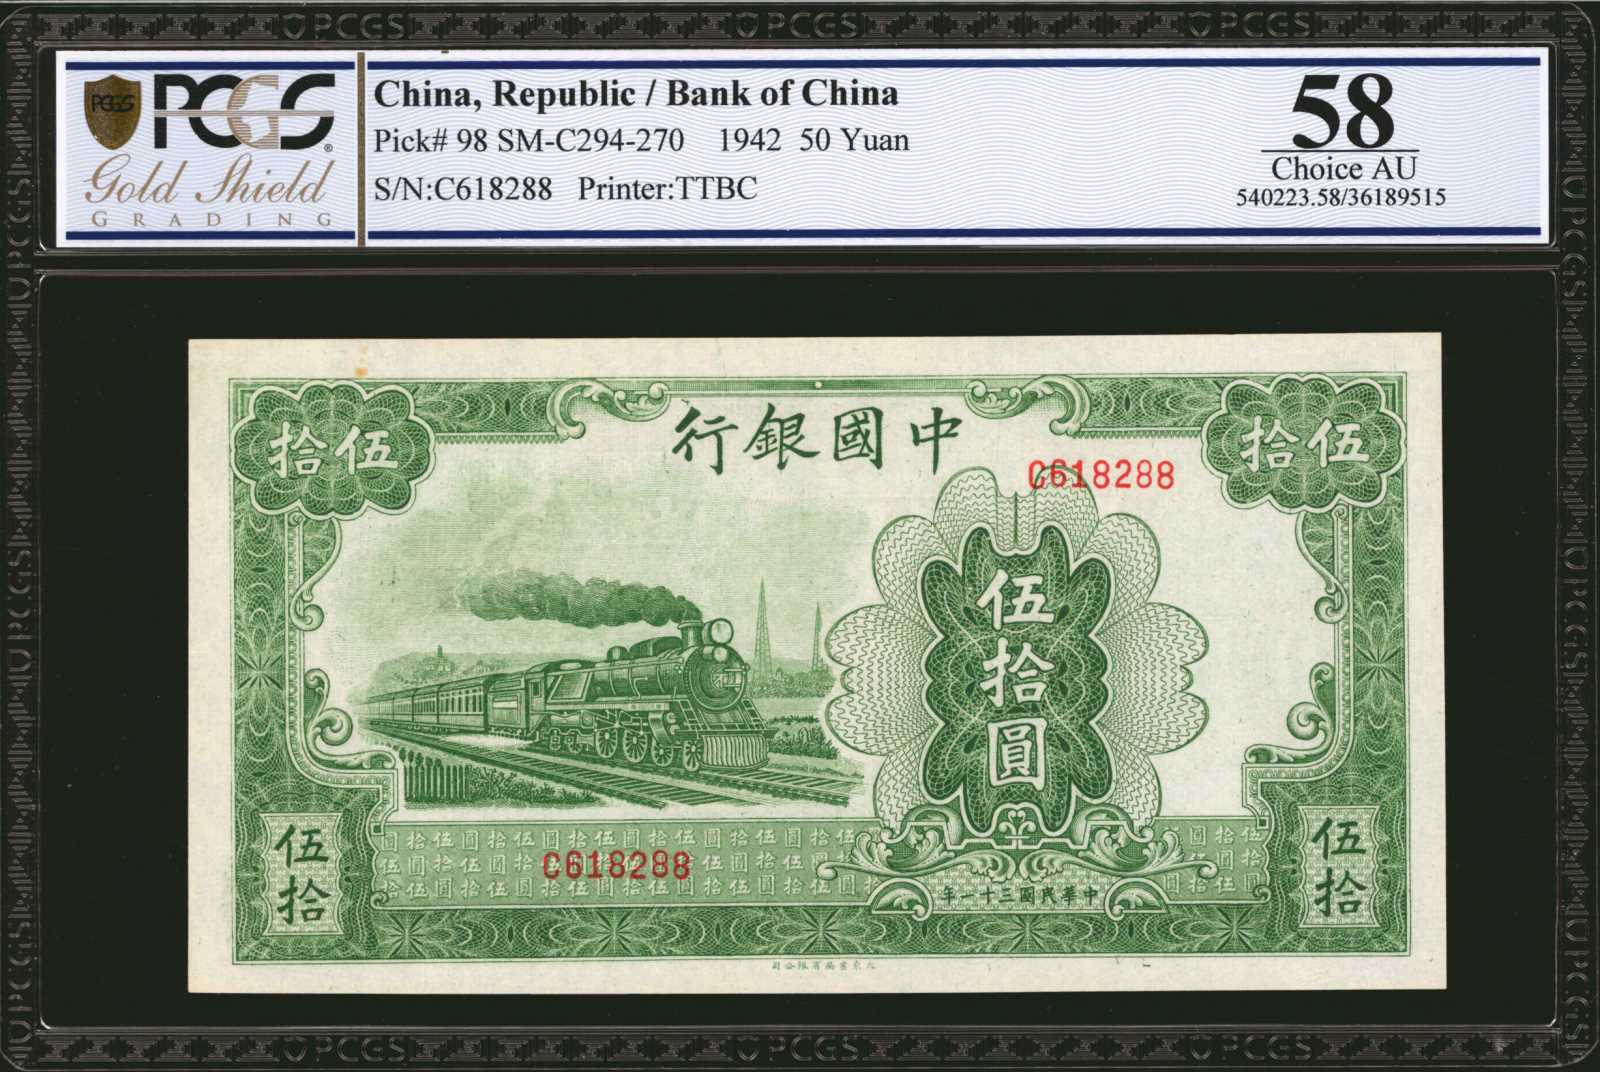 CHINA--REPUBLIC. Bank of China. 50 Yuan, 1942. P-98. PCGS GSG